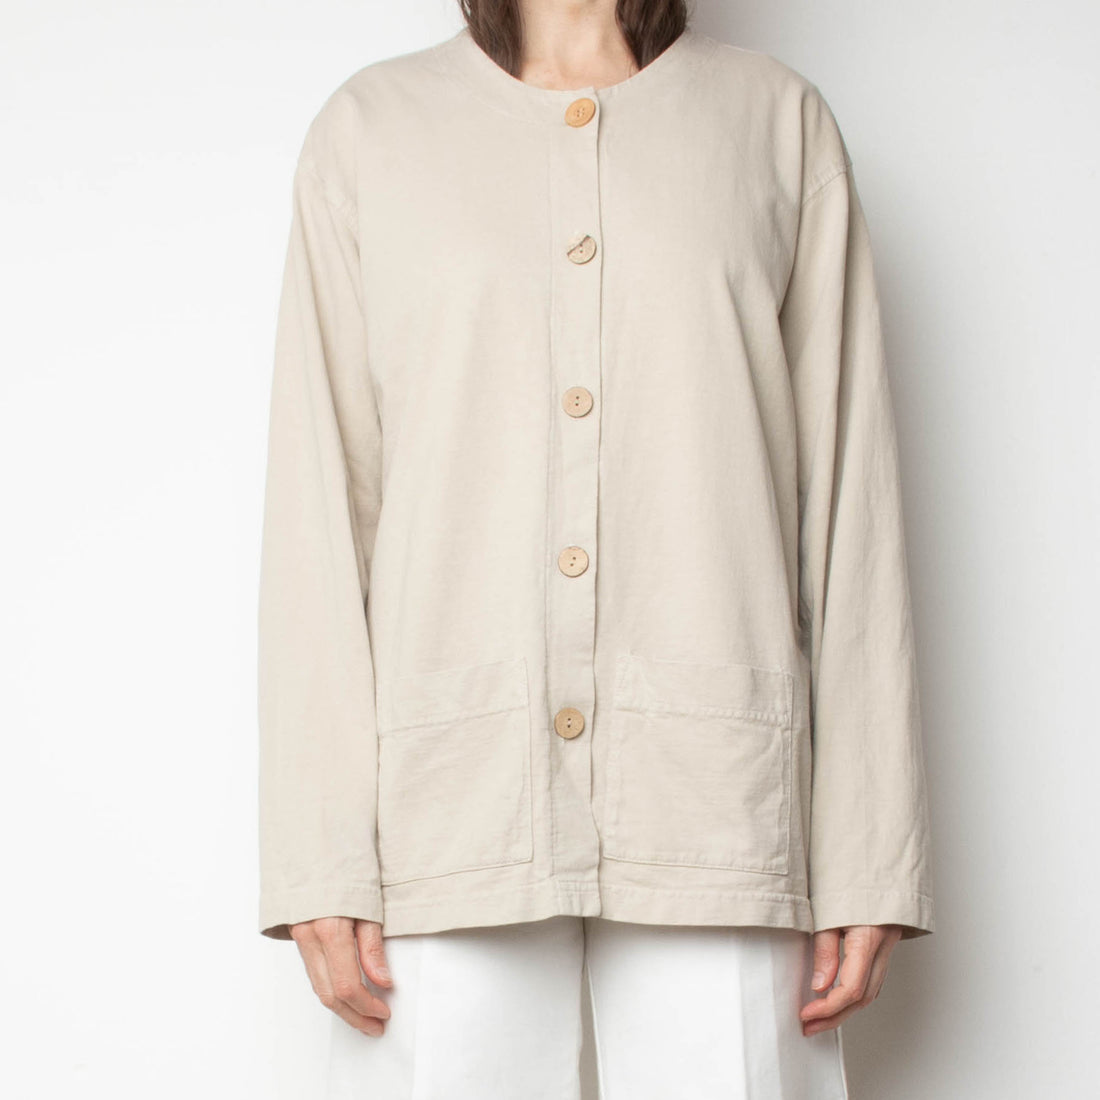 Cotton Jersey Jacket